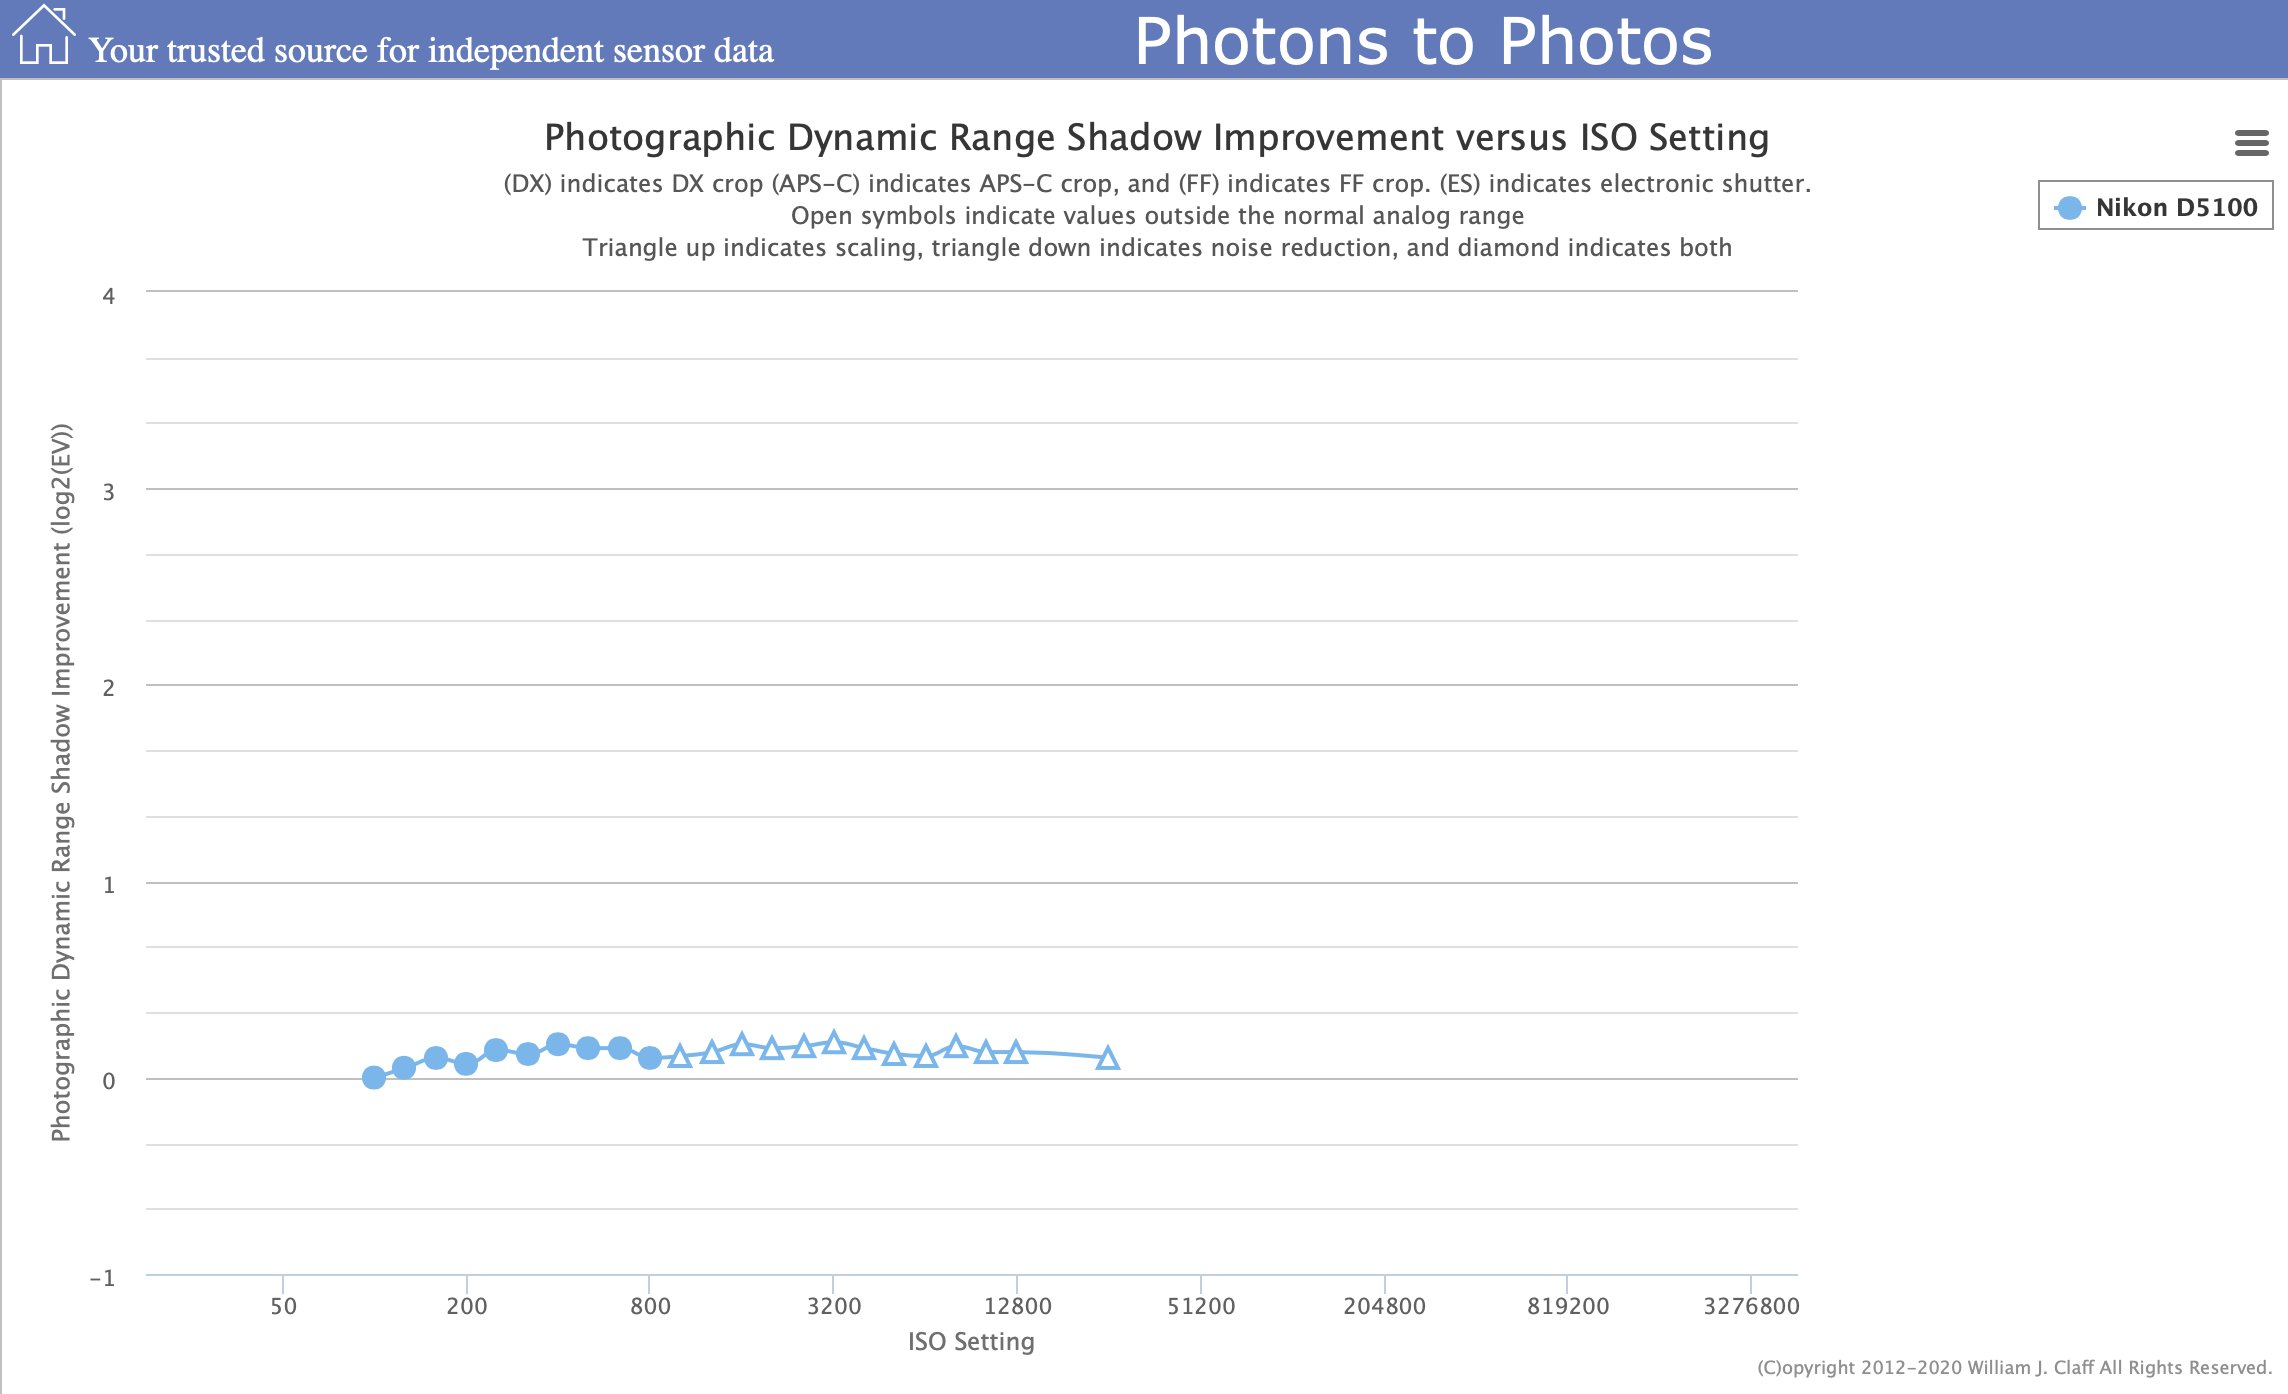 http://photonstophotos.net/Charts/PDR_Shadow.htm#Nikon%20D5100